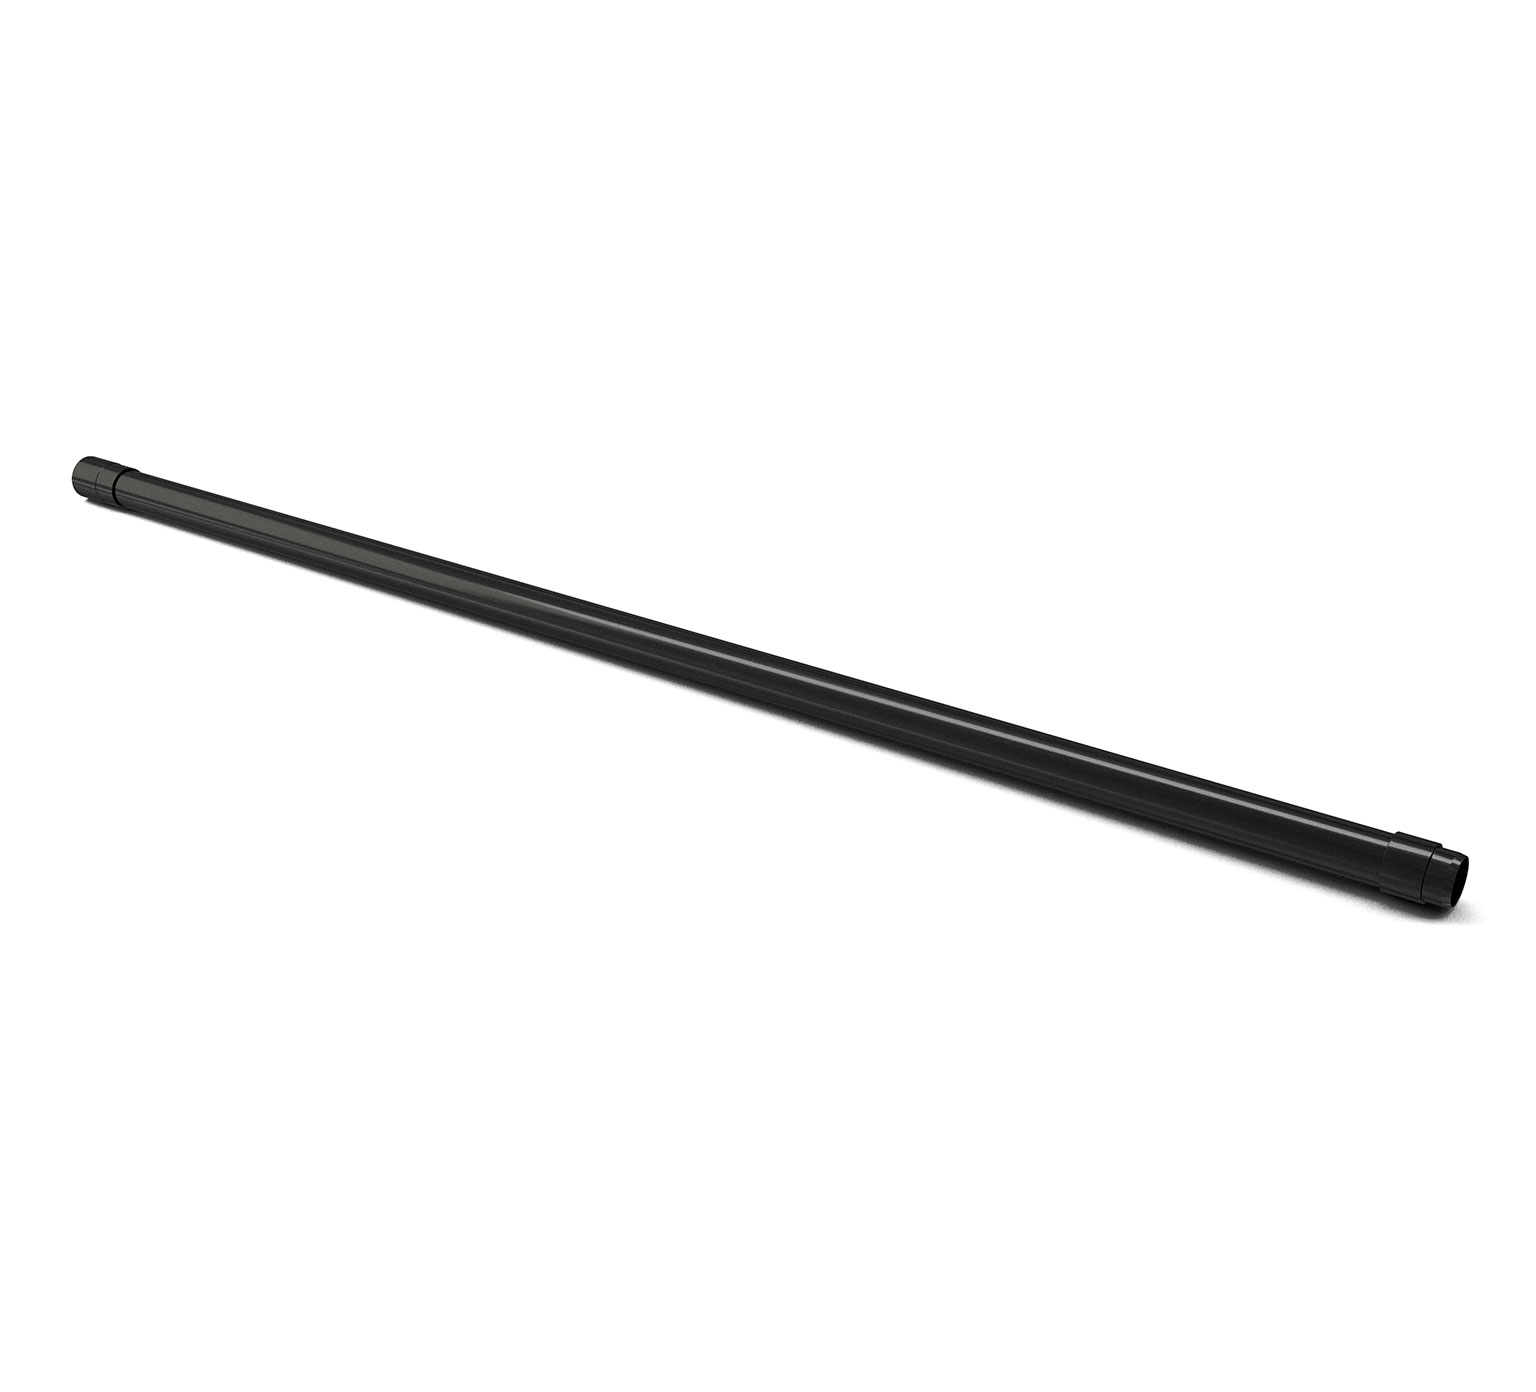 1068092 Tuyau d'aspiration en PVC noir - 1,95 x 73,61 po / 4,95 x 186,97 cm alt 1